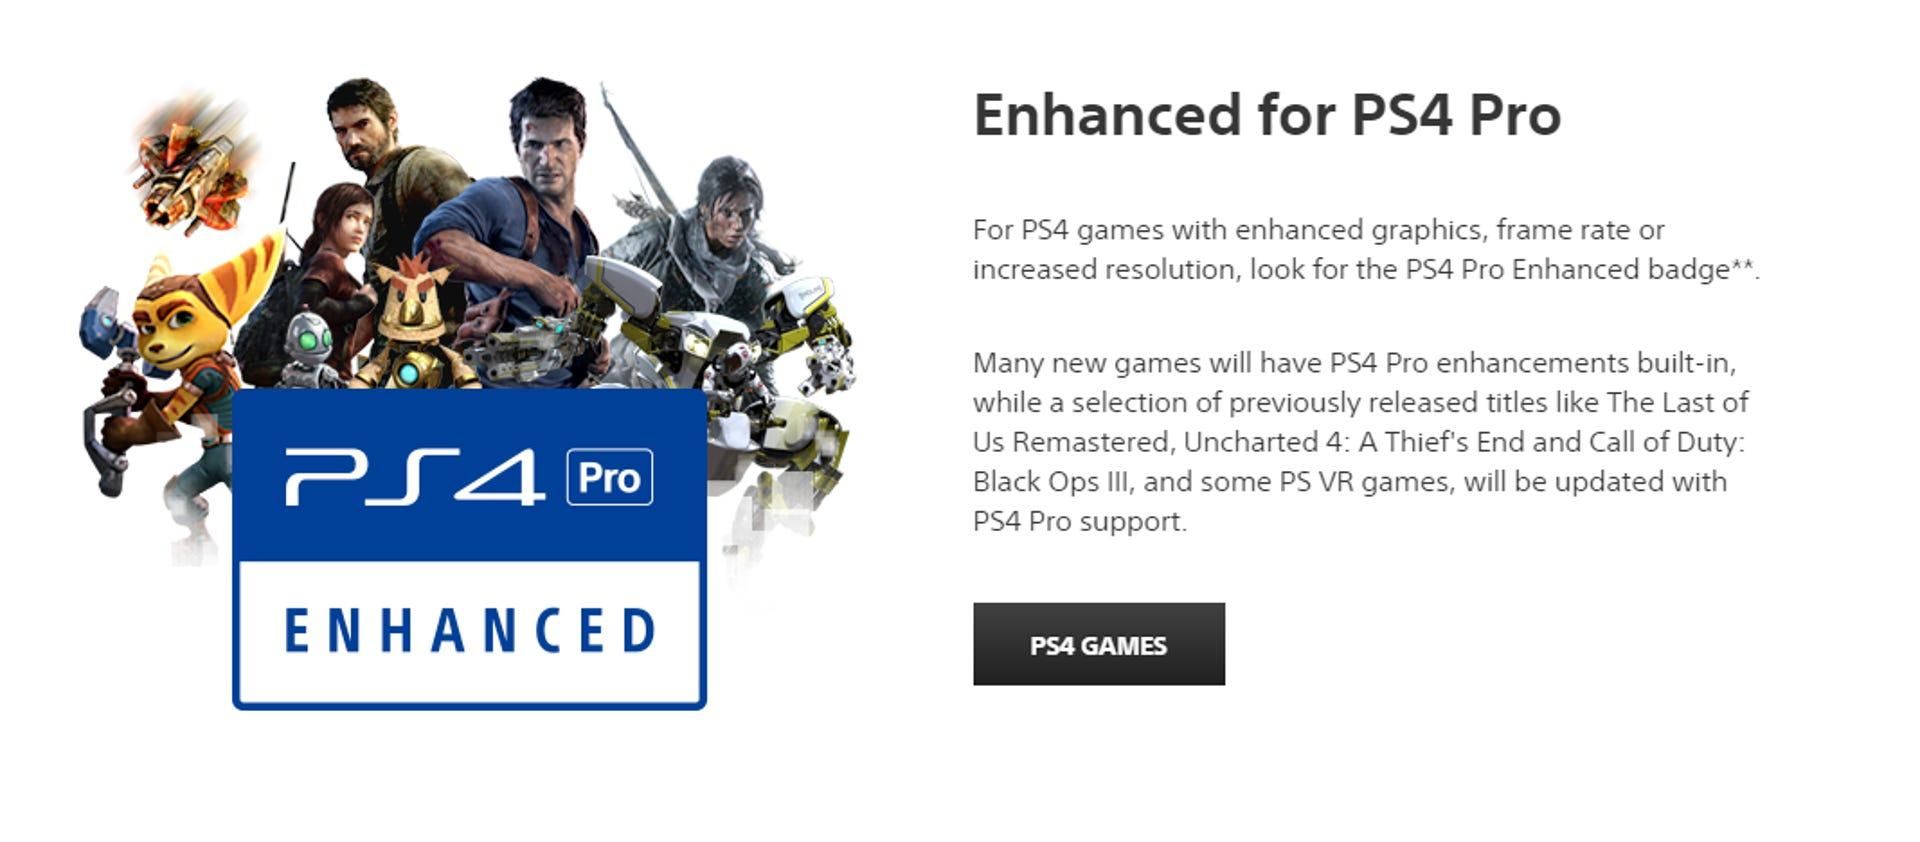 نشان ویژه PS5 Pro Enhanced